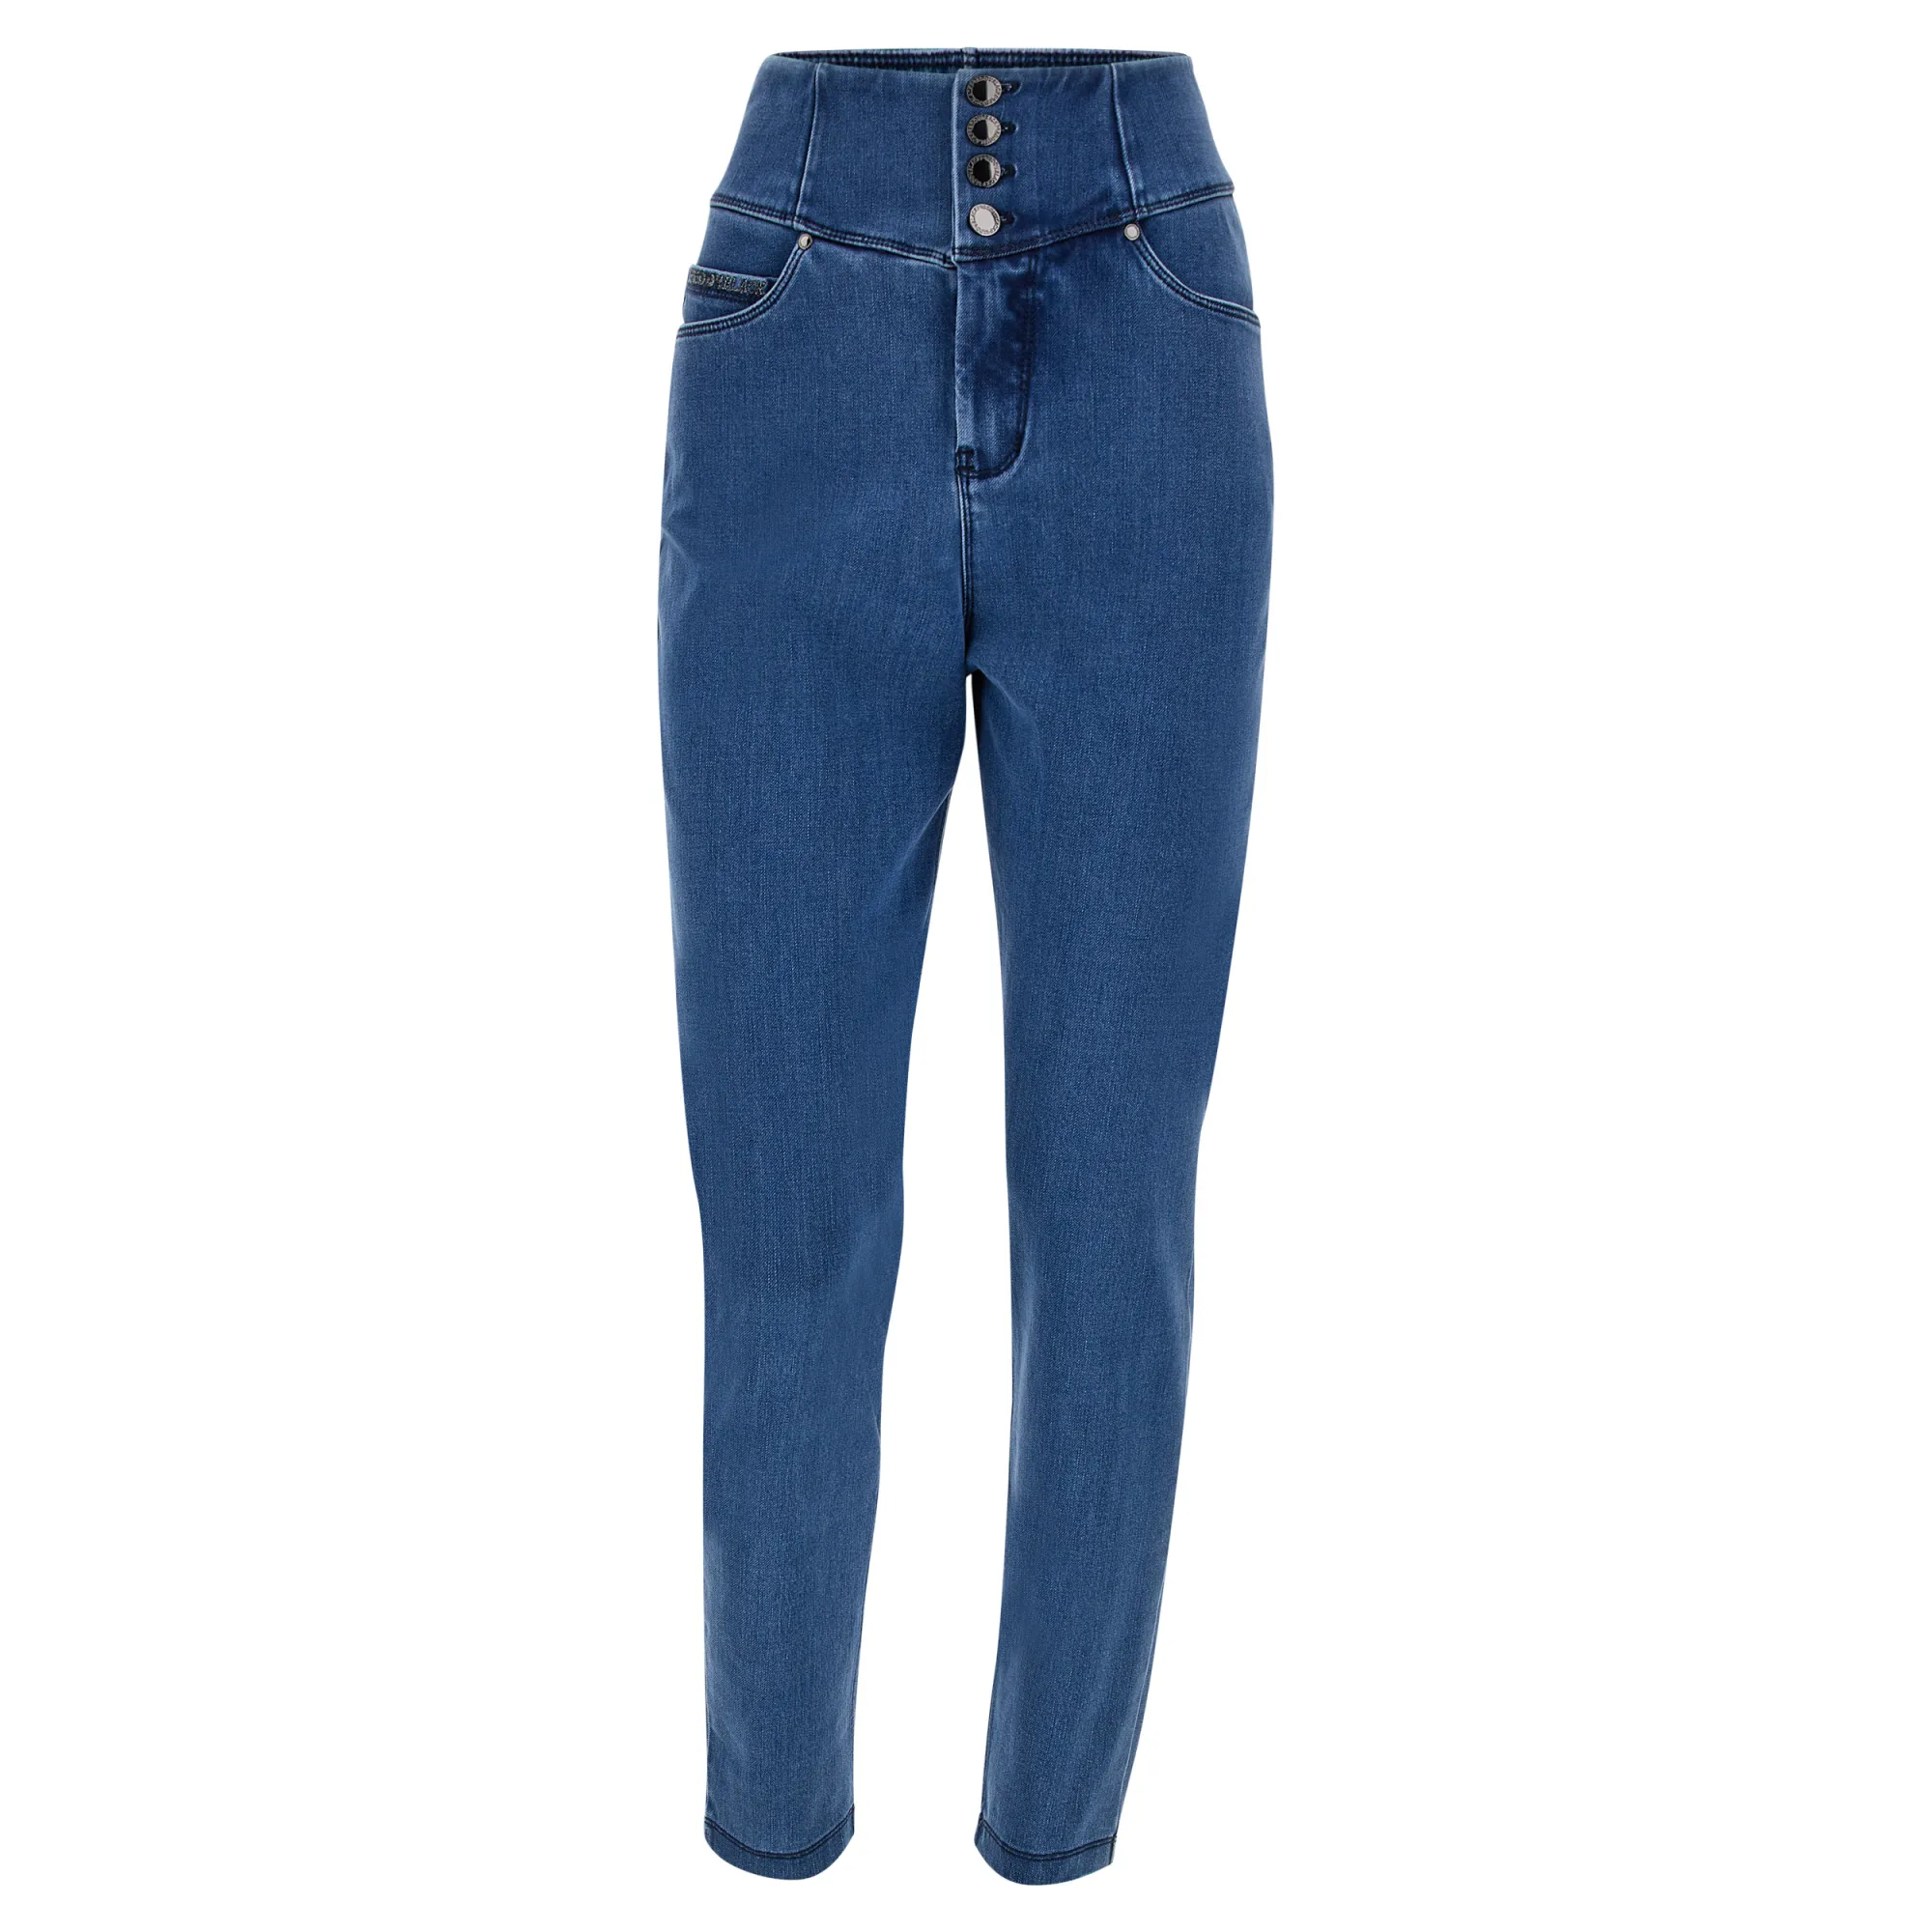 Freddy Fit Jeans - Buttoned Super High Waist Skinny - Clear Denim – Blue Seam - J4B